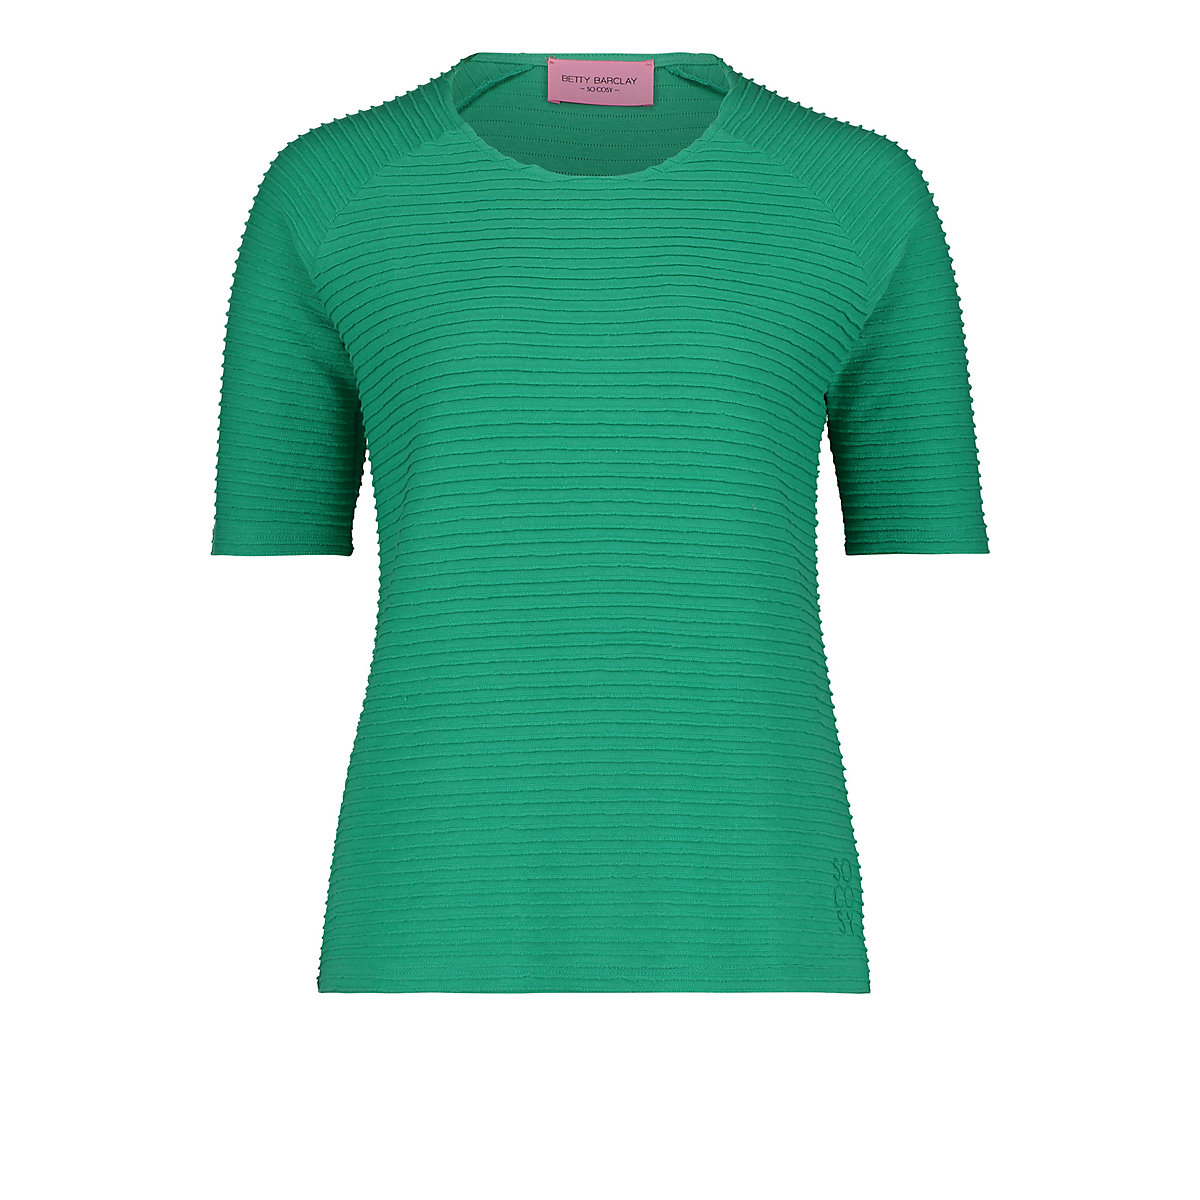 Betty Barclay Betty Barclay Casual-Shirt mit Rippenstruktur grün